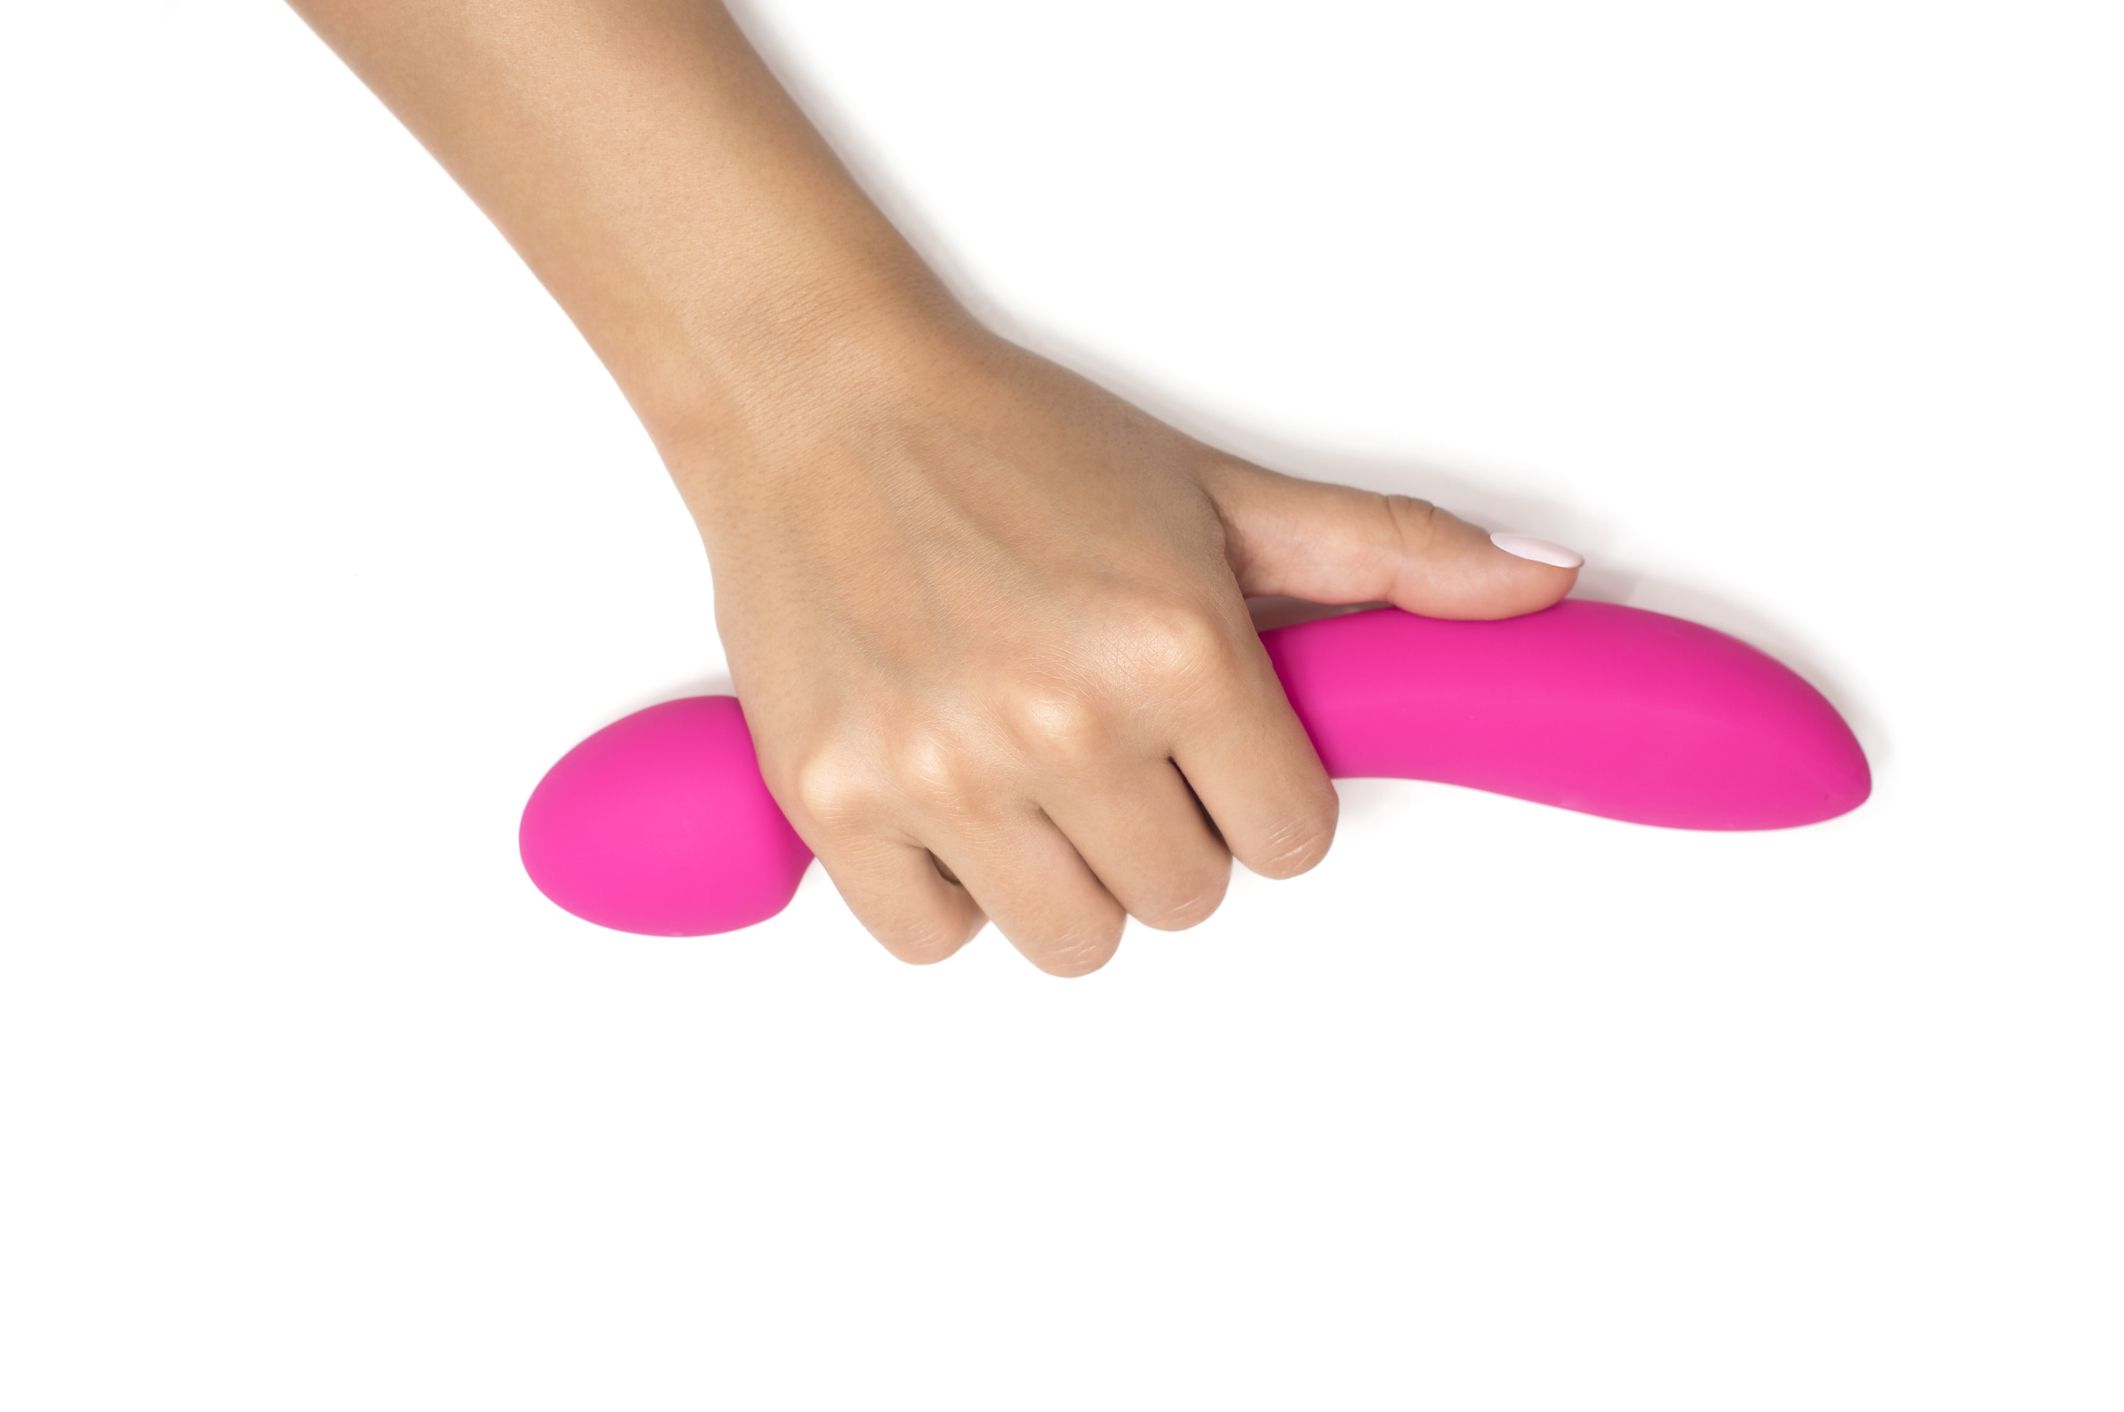 Sex toys the health benefits of vibrators